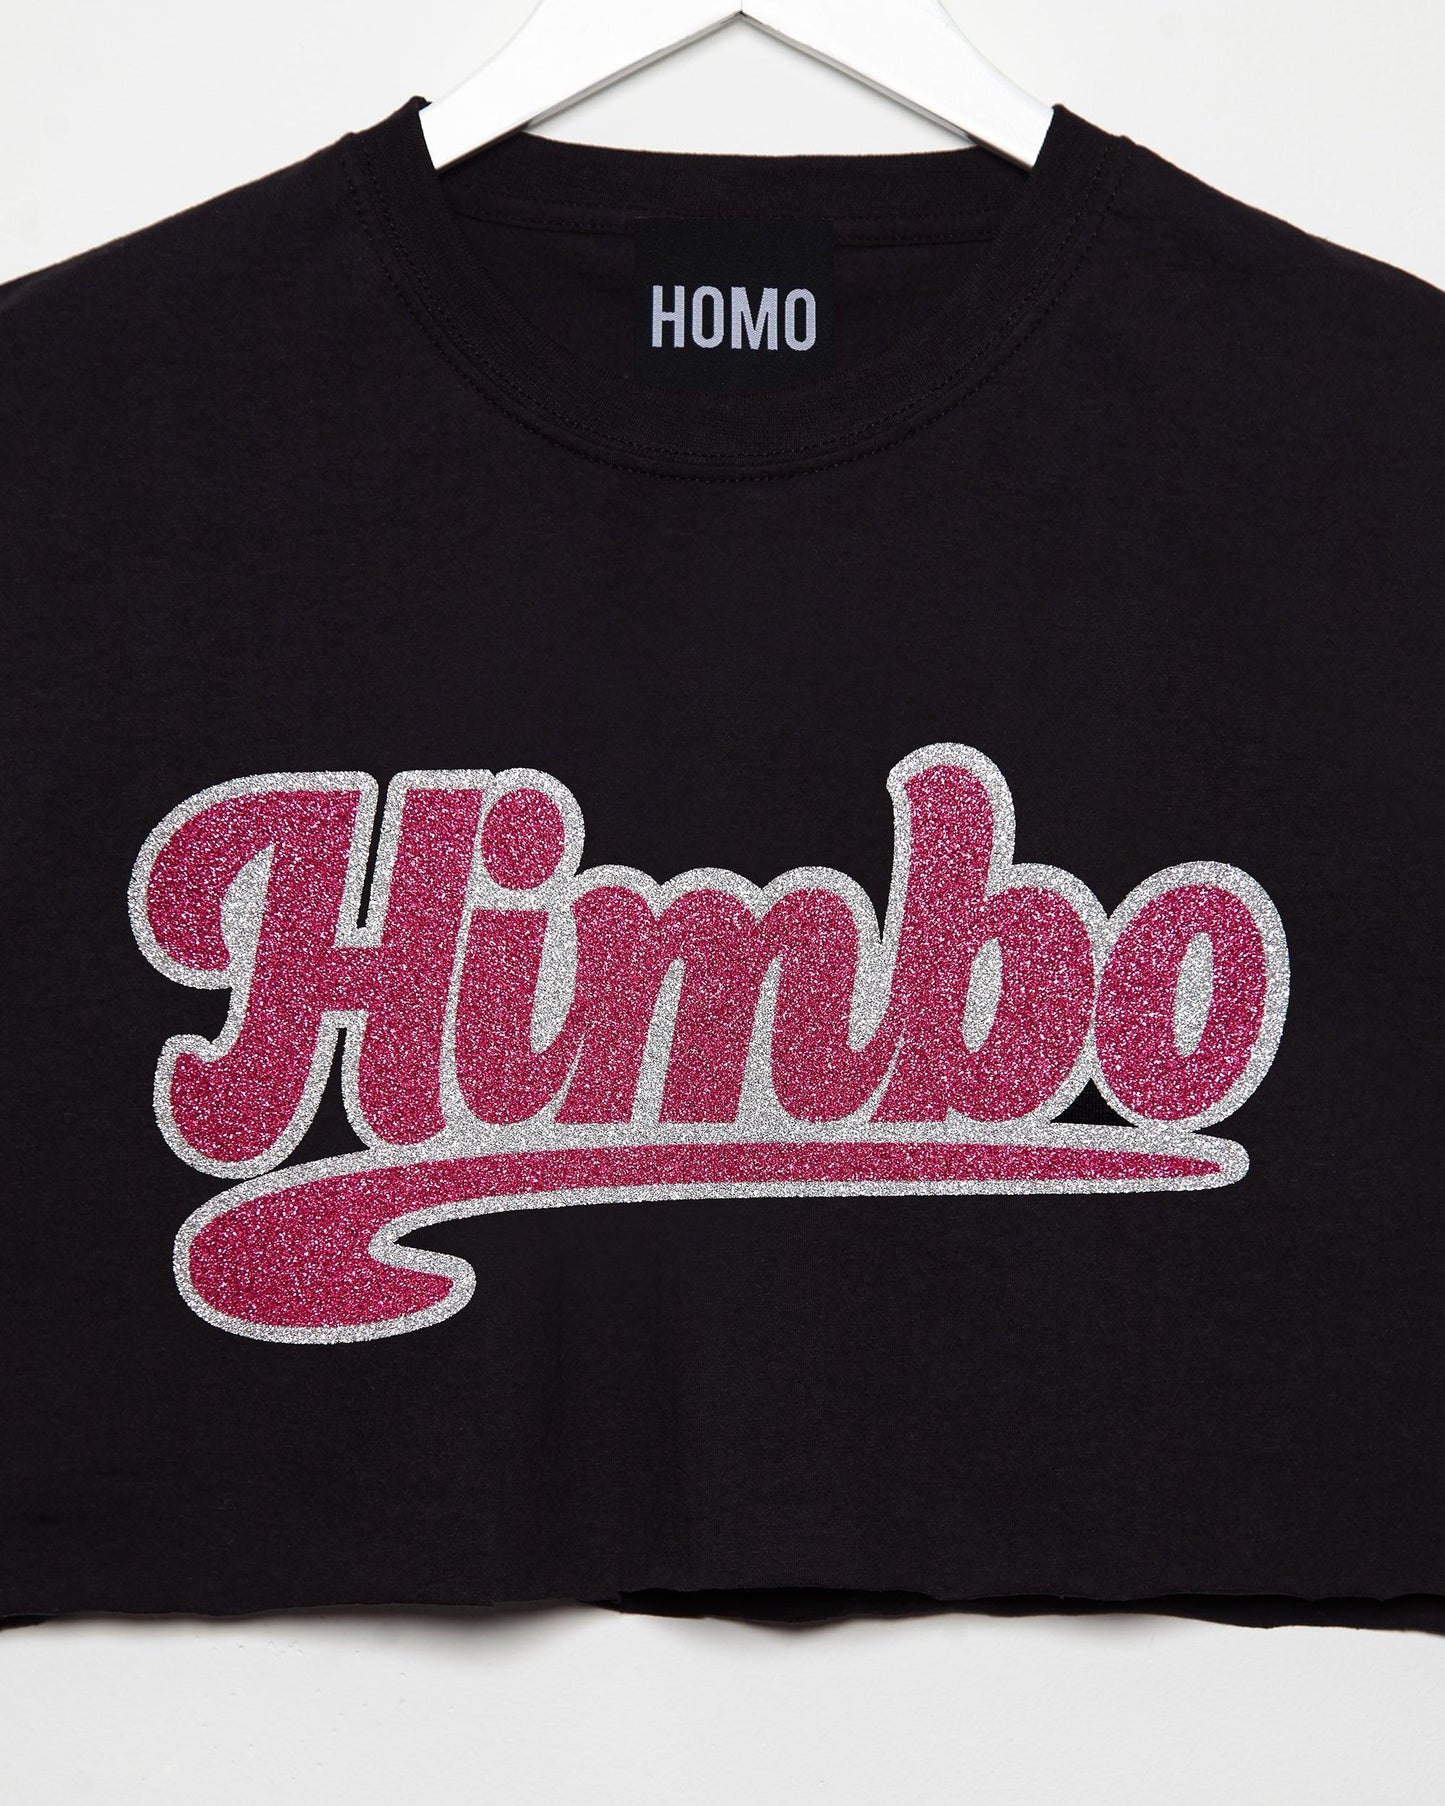 Himbo, pink/silver glitter on black - mens crop top. - HOMOLONDON